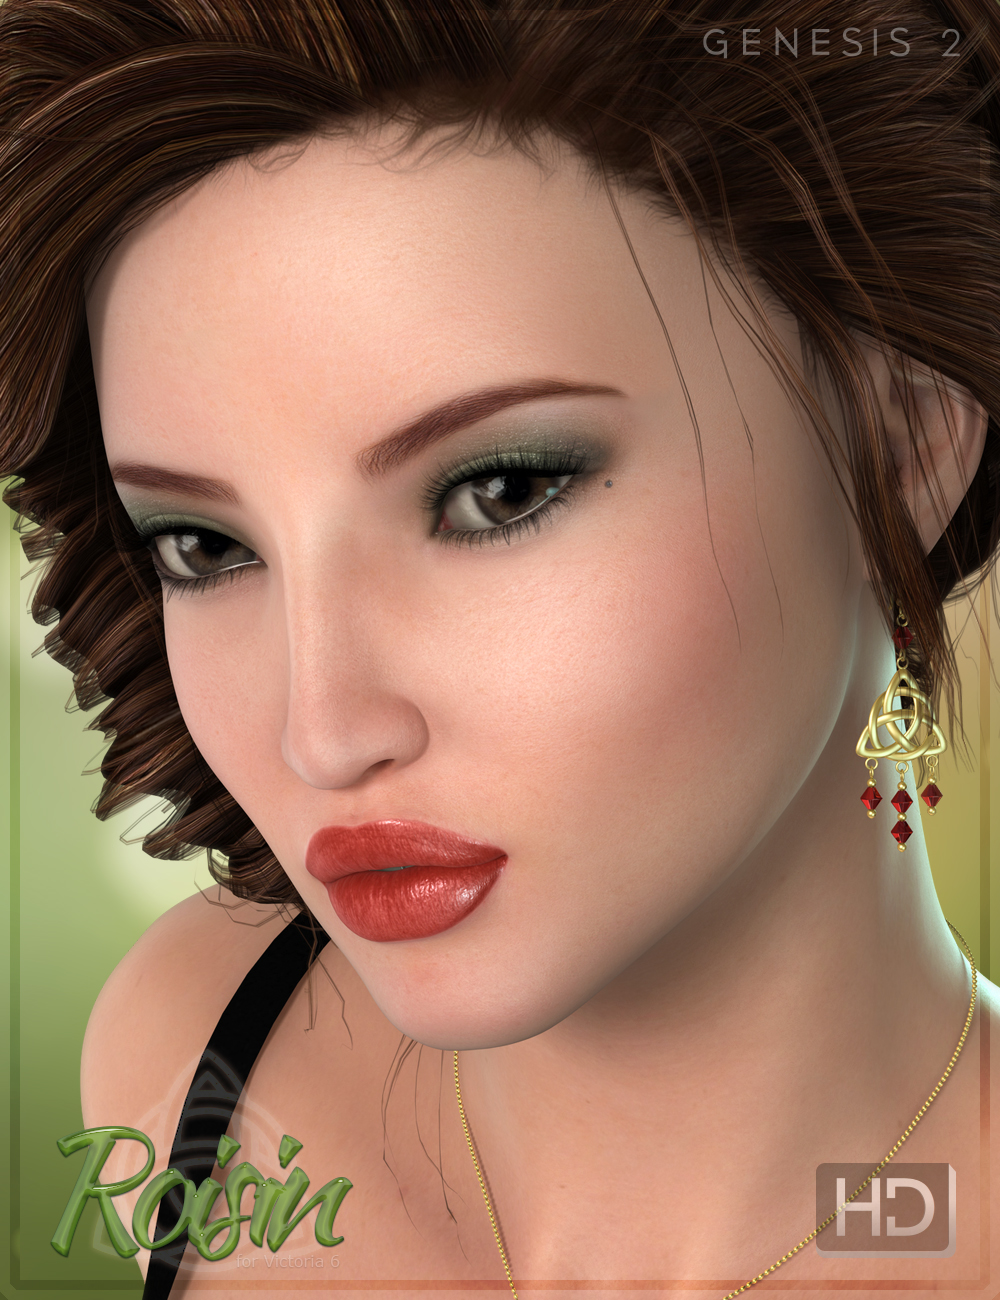 FW Roisin HD for Victoria 6 by: Fred Winkler ArtFisty & Darc, 3D Models by Daz 3D